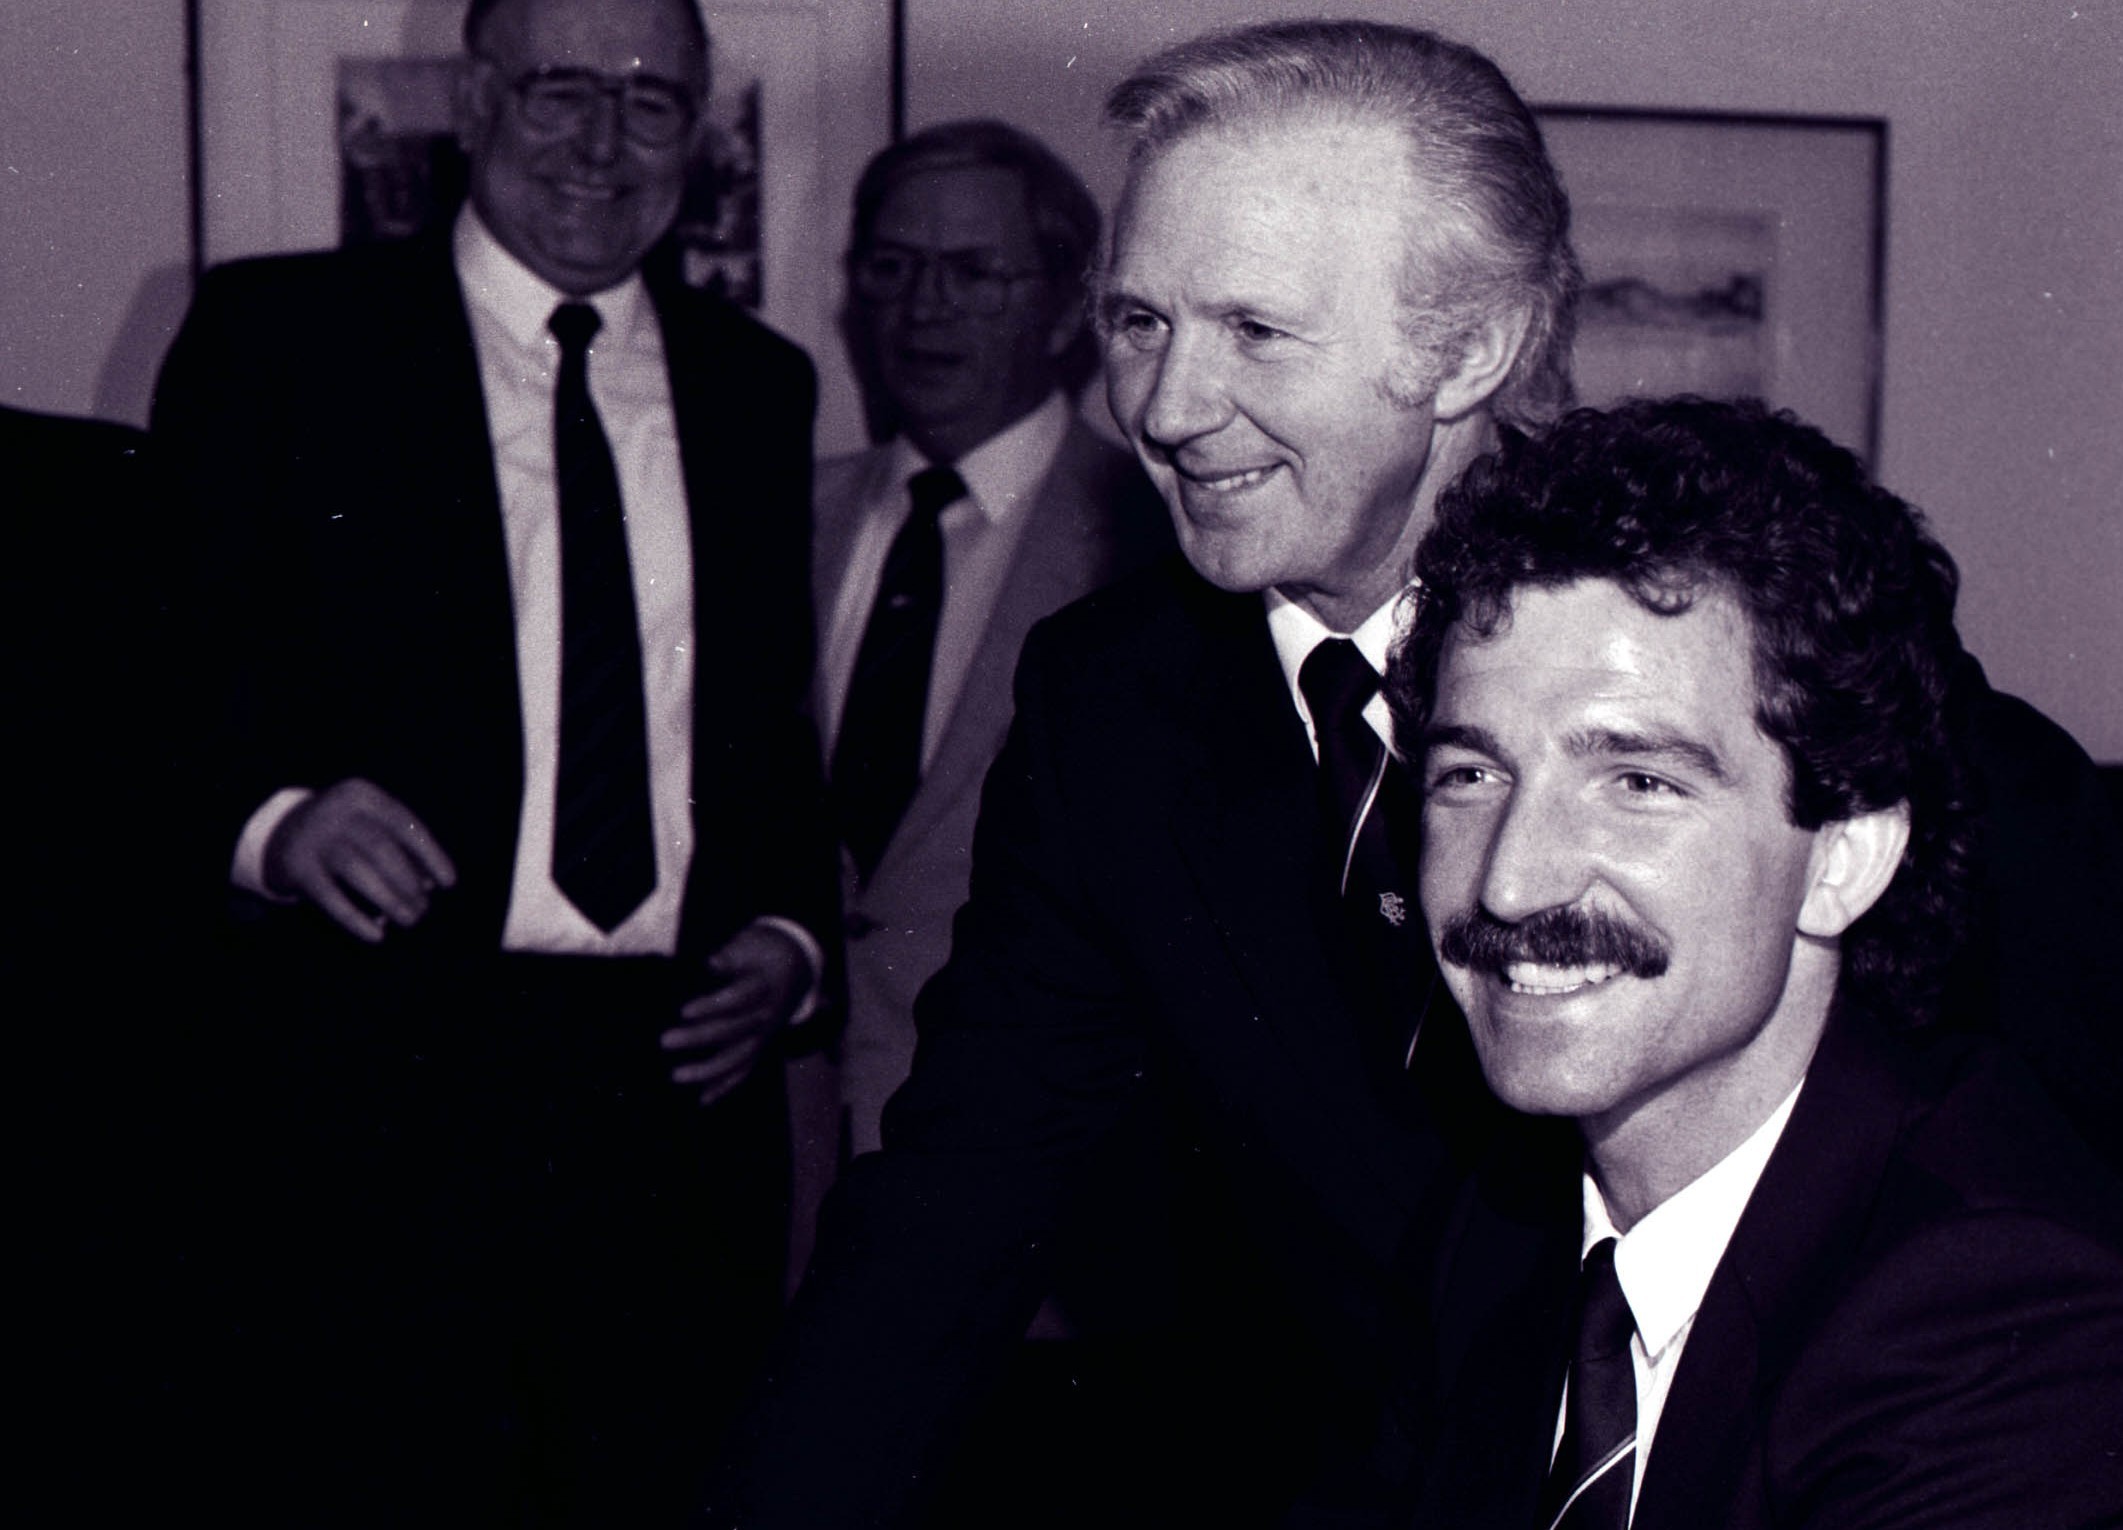 Rangers chairman David Holmes (left) unveils Graeme Souness as the new Rangers Manager, 1986